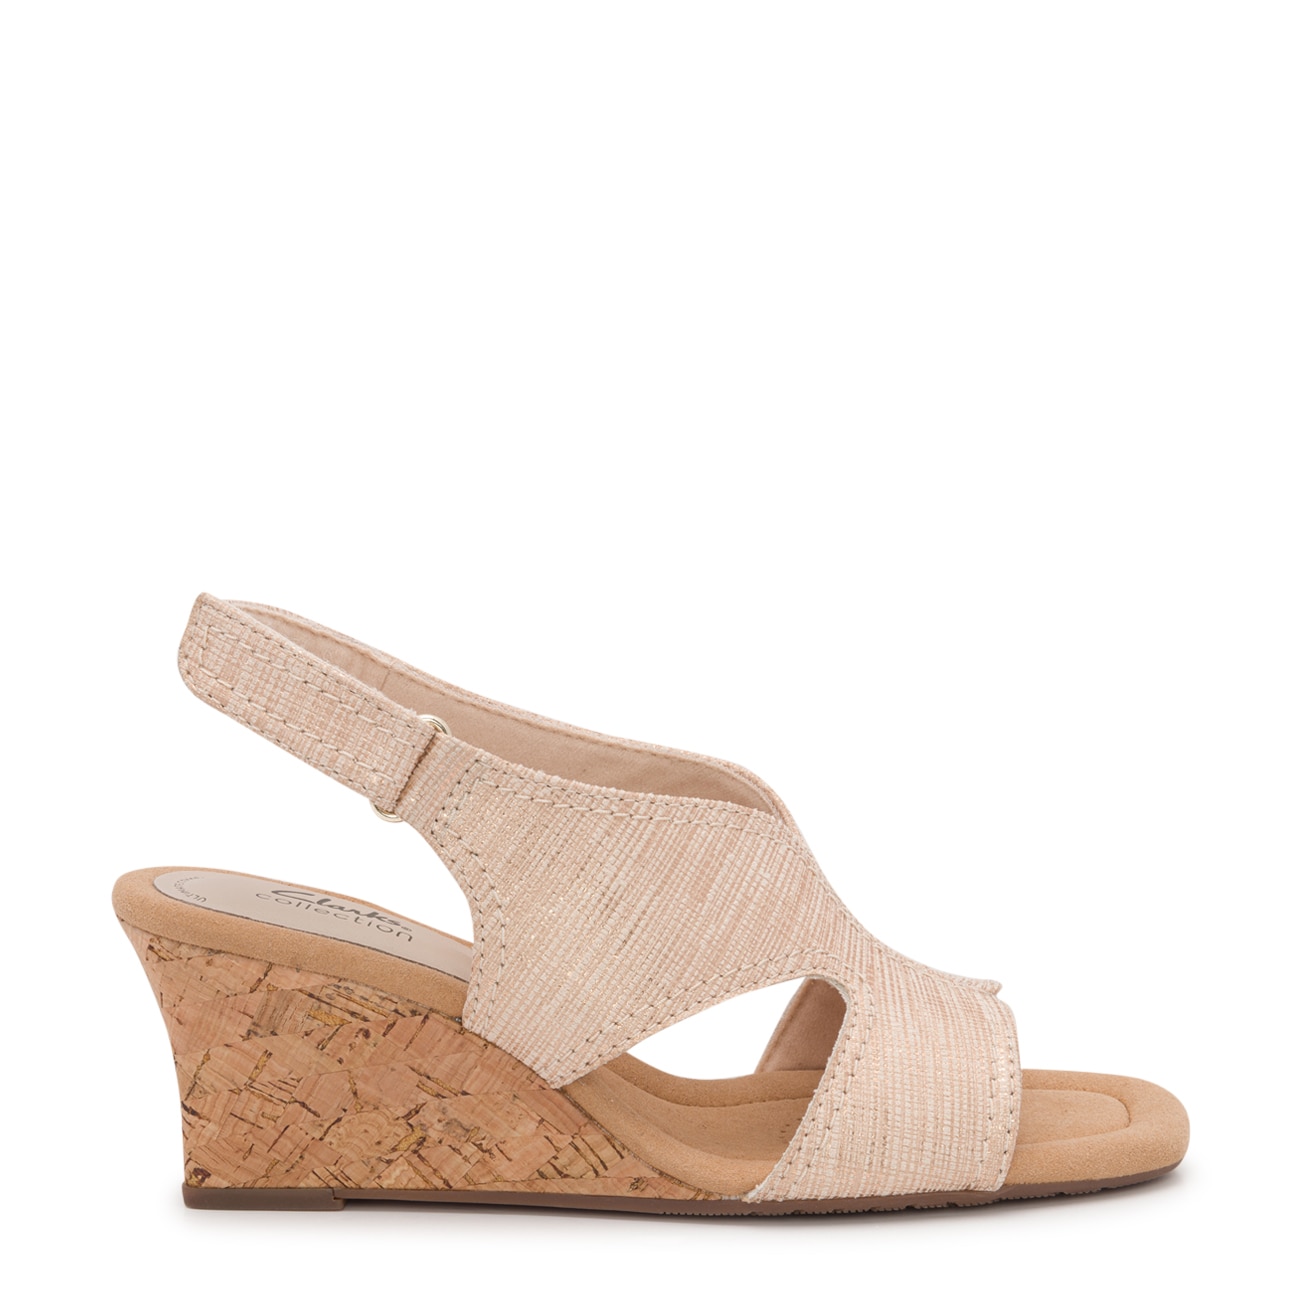 Clarks Women’s Kyarra Aster Wedge Sandal | The Shoe Company